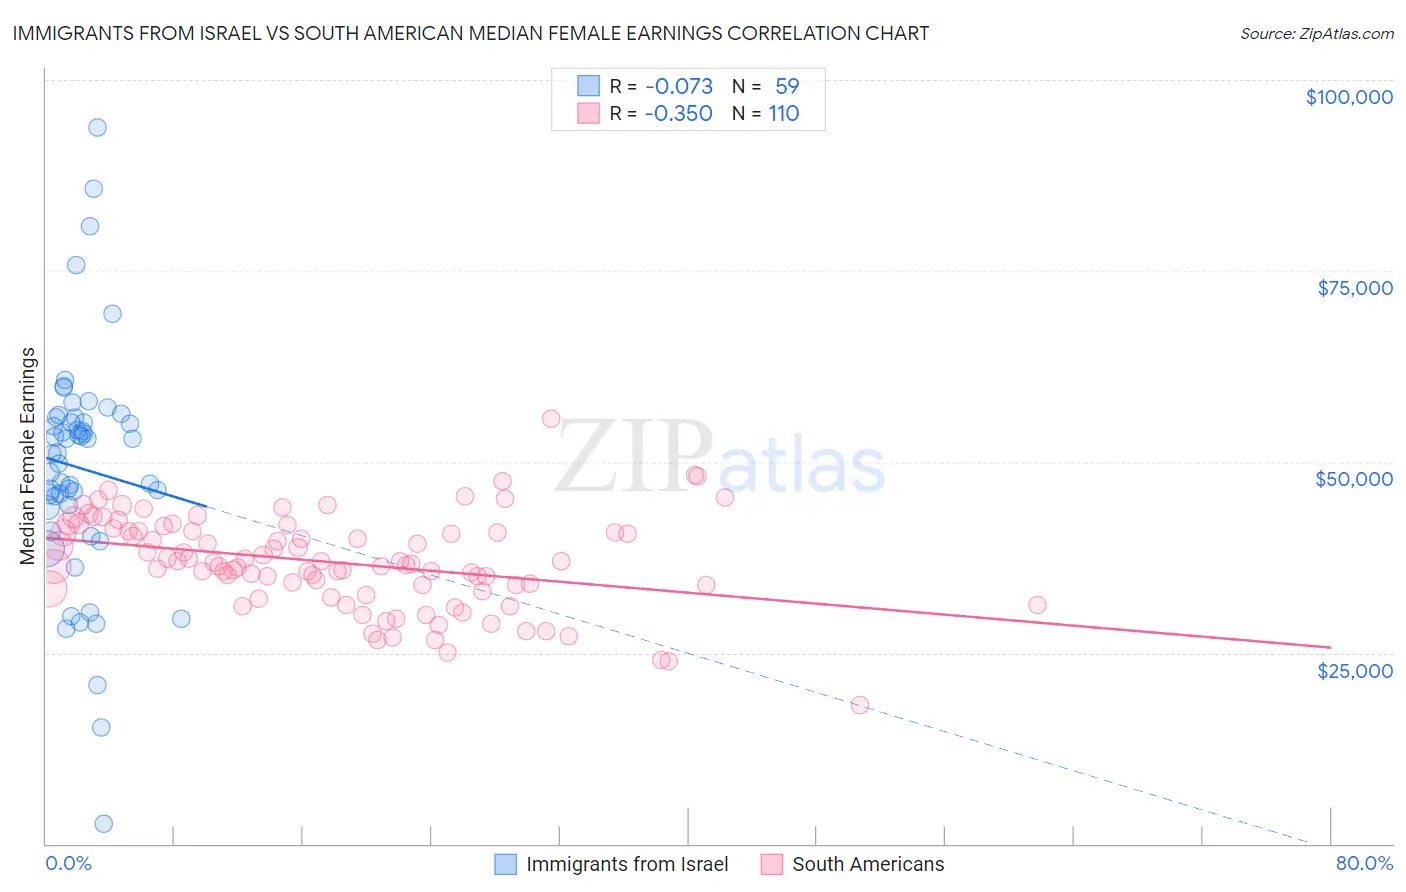 Immigrants from Israel vs South American Median Female Earnings